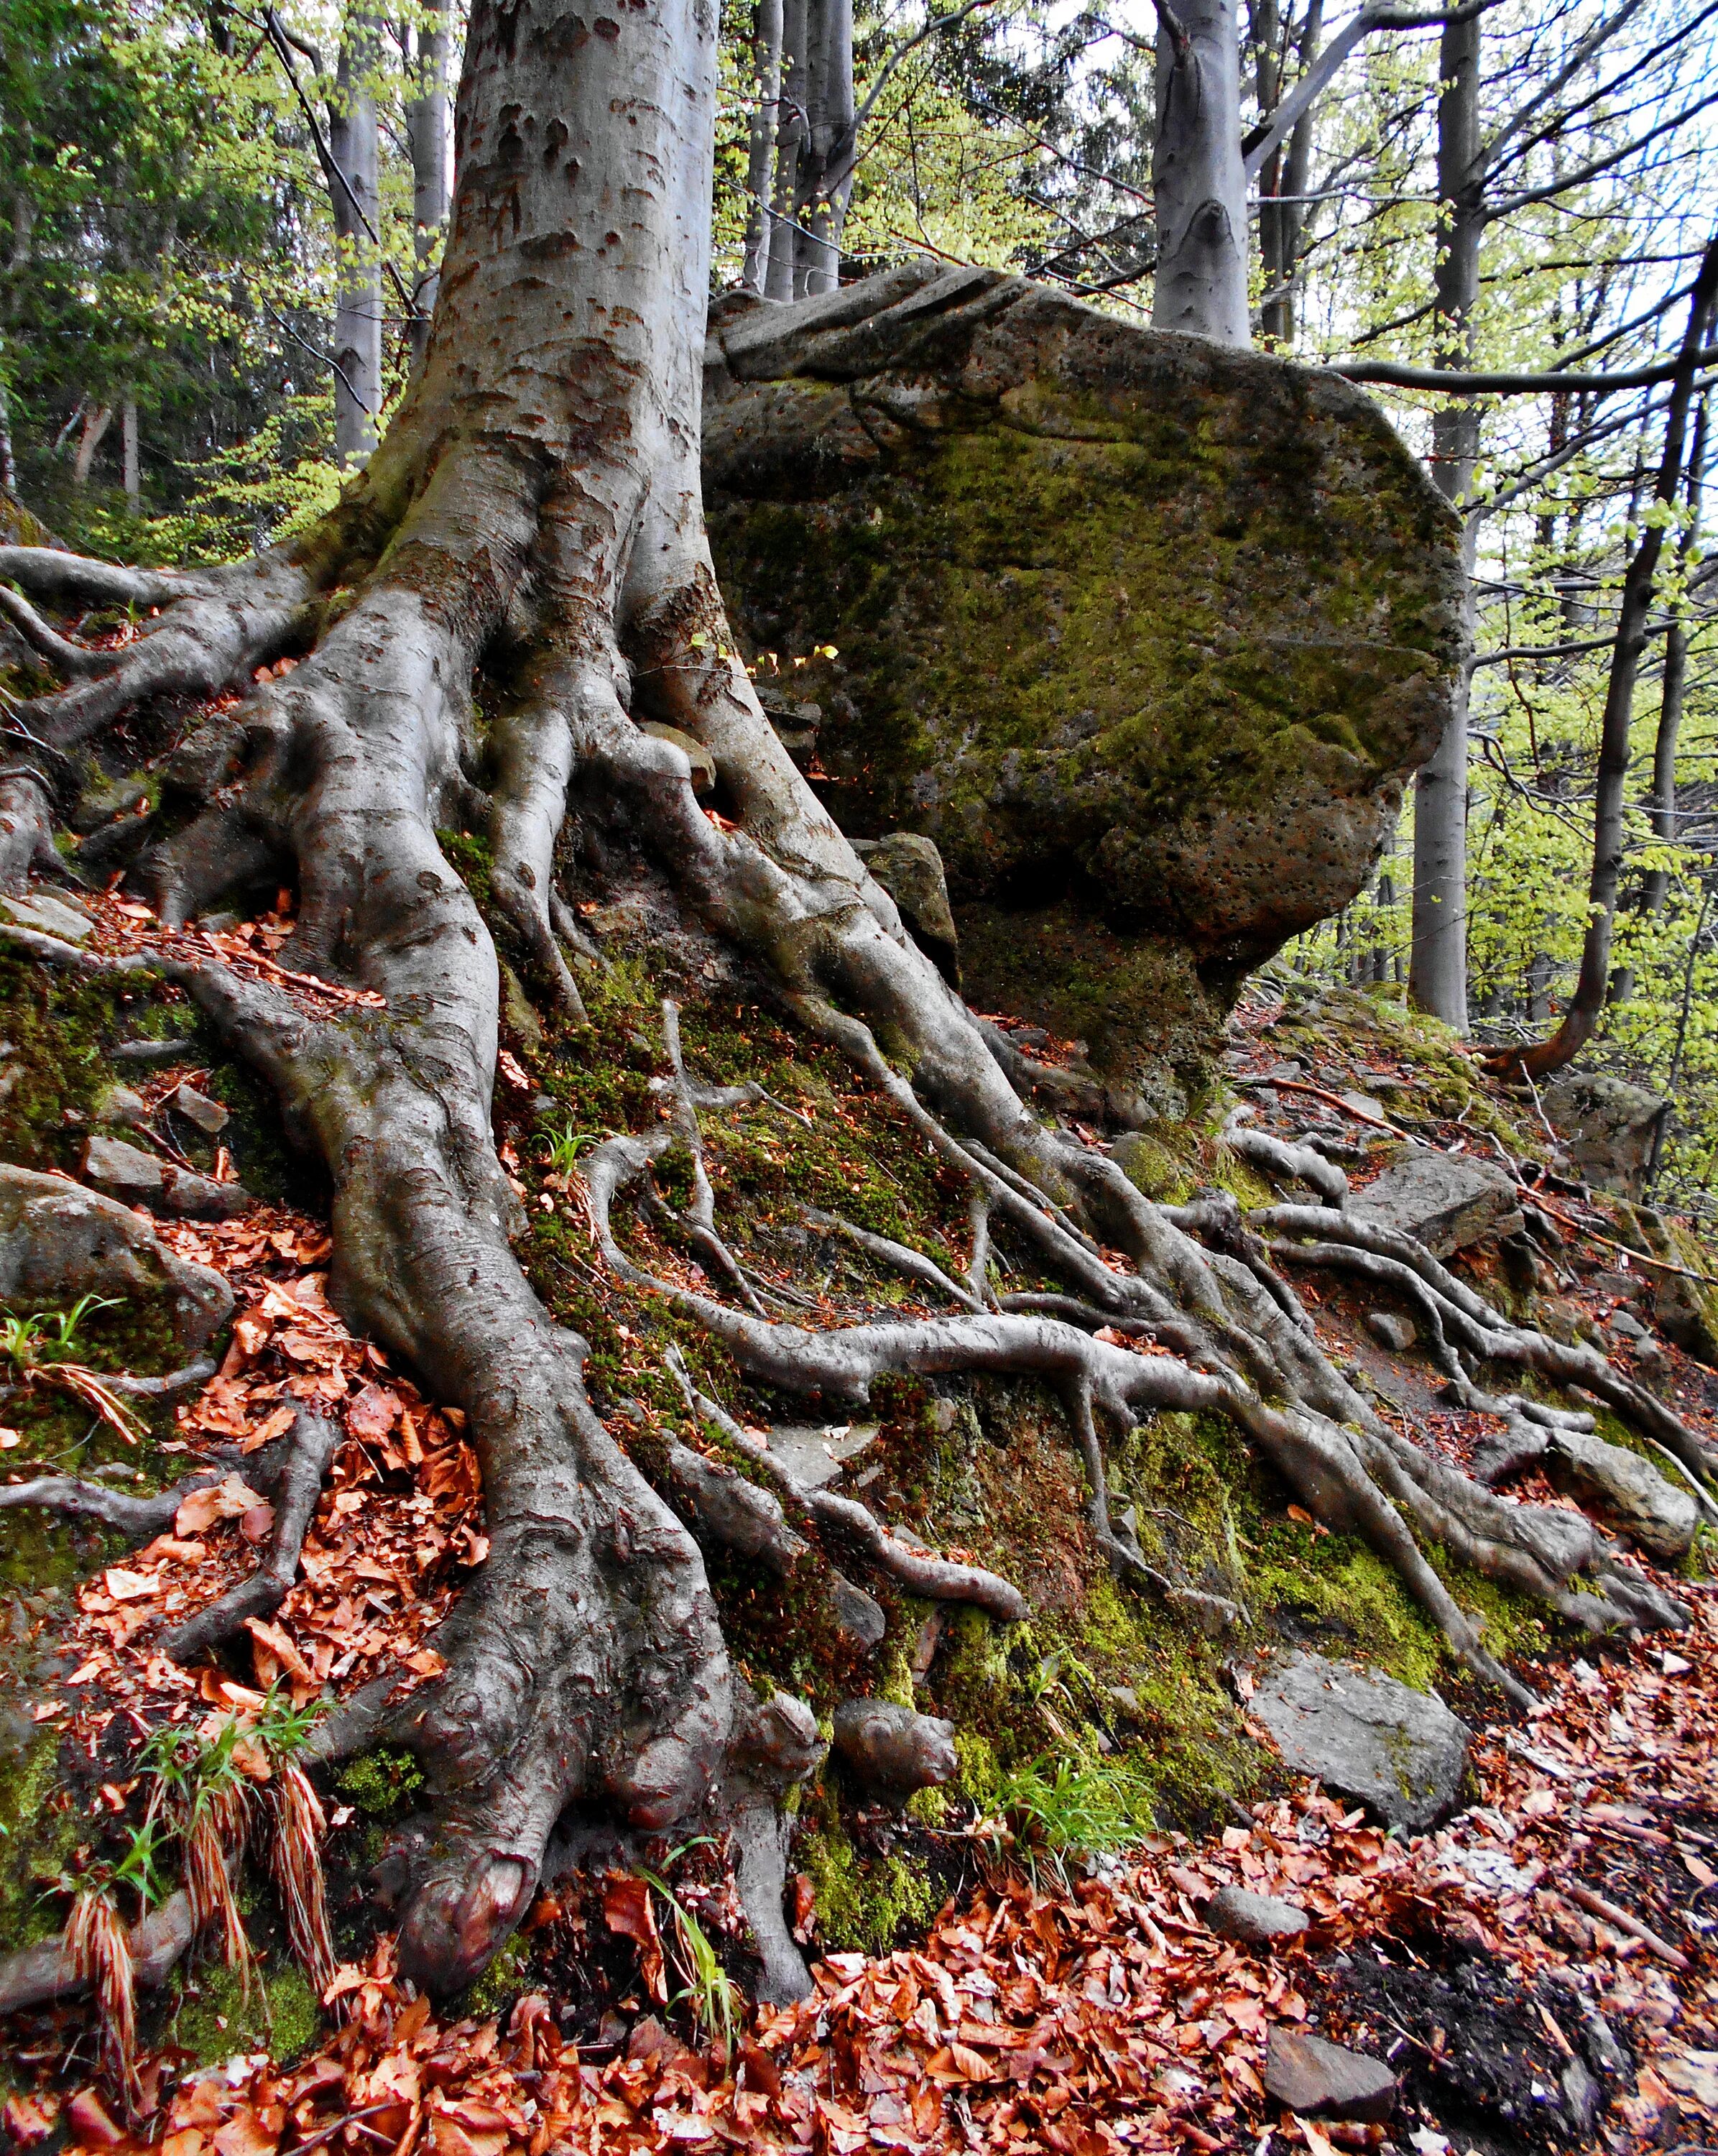 Камень дерева. Каменное дерево. Корни дерева. Старое дерево в лесу. Красивое дерево с корнями.